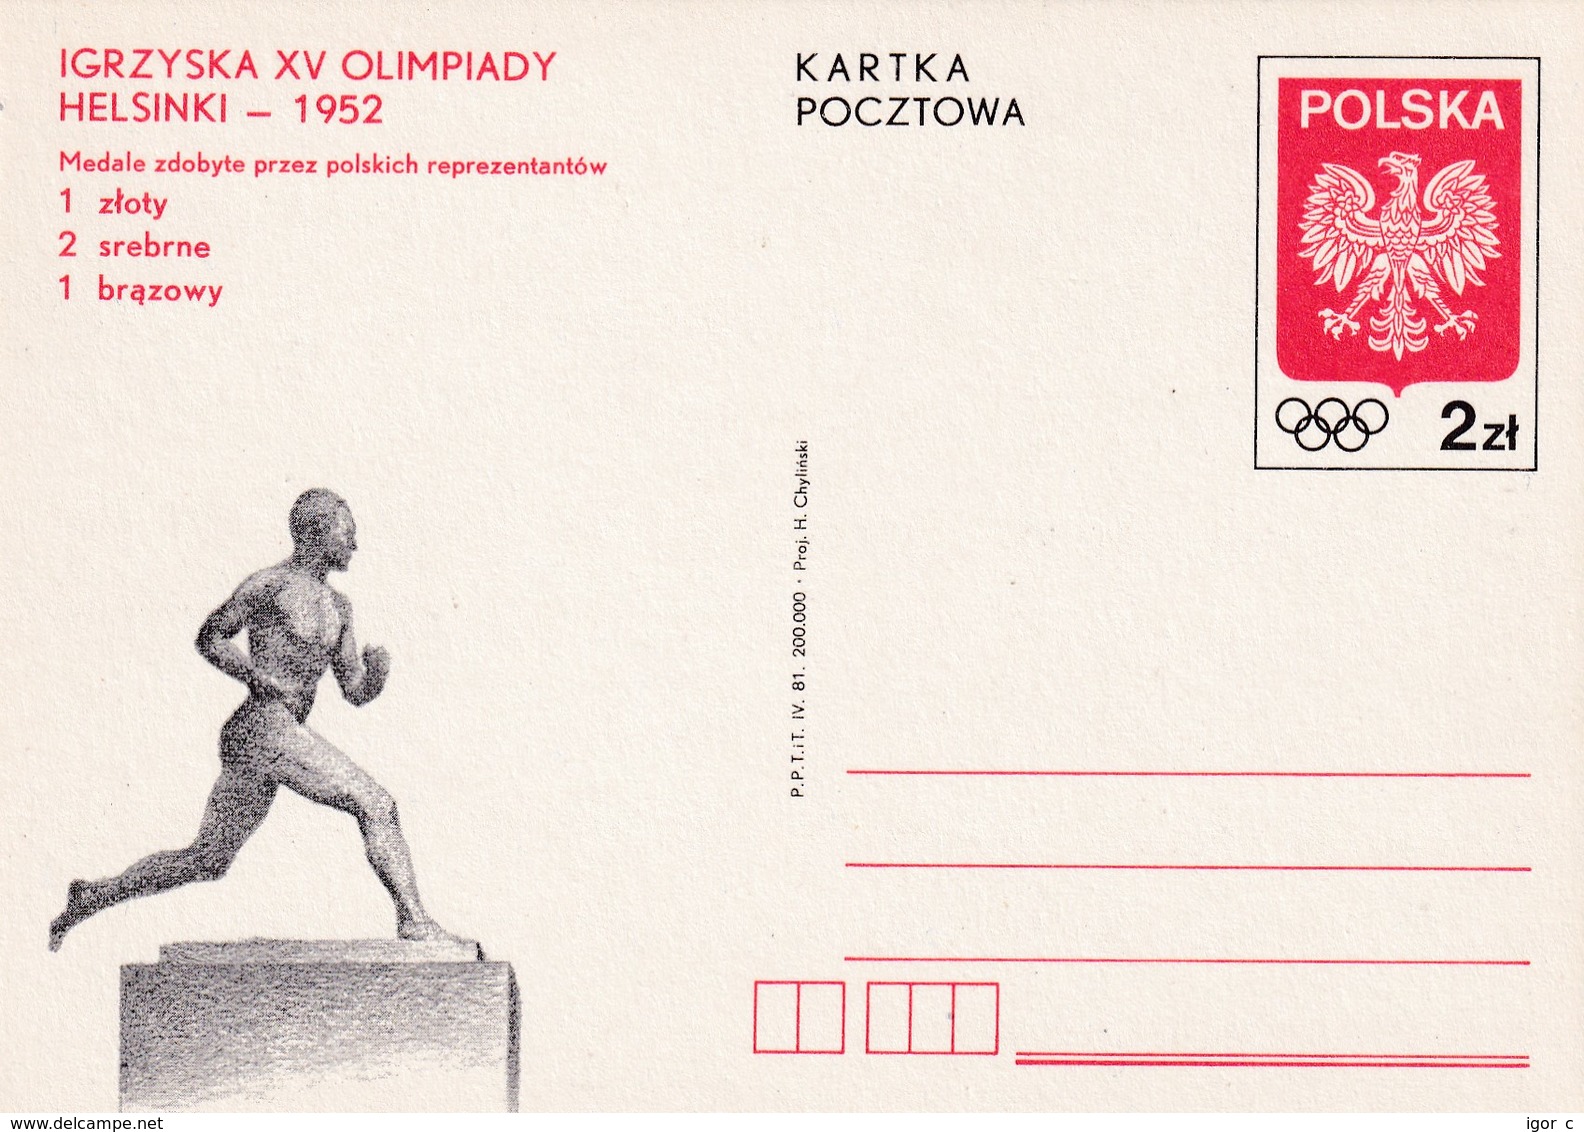 Poland 1952 Postal Stationery Card: Olympic Games Helsinki; Paavo Nurmi Statue; Eagle Adler; Polish Medal Table - Sommer 1952: Helsinki